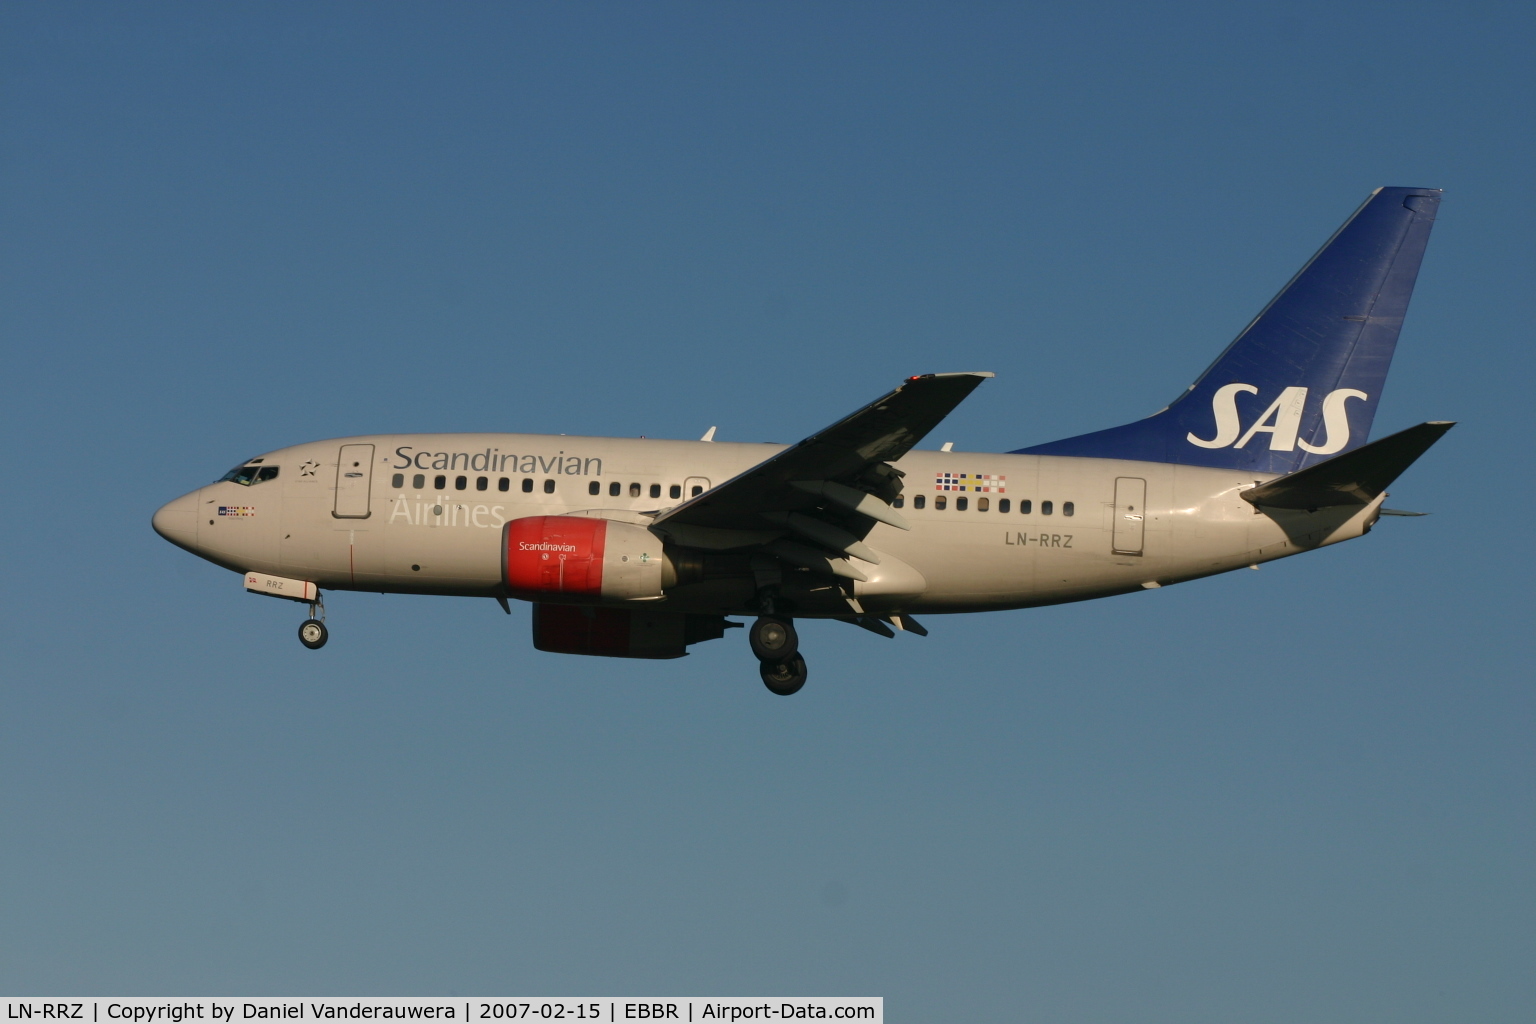 LN-RRZ, 1998 Boeing 737-683 C/N 28295, final to rwy 25L for flight SK4743